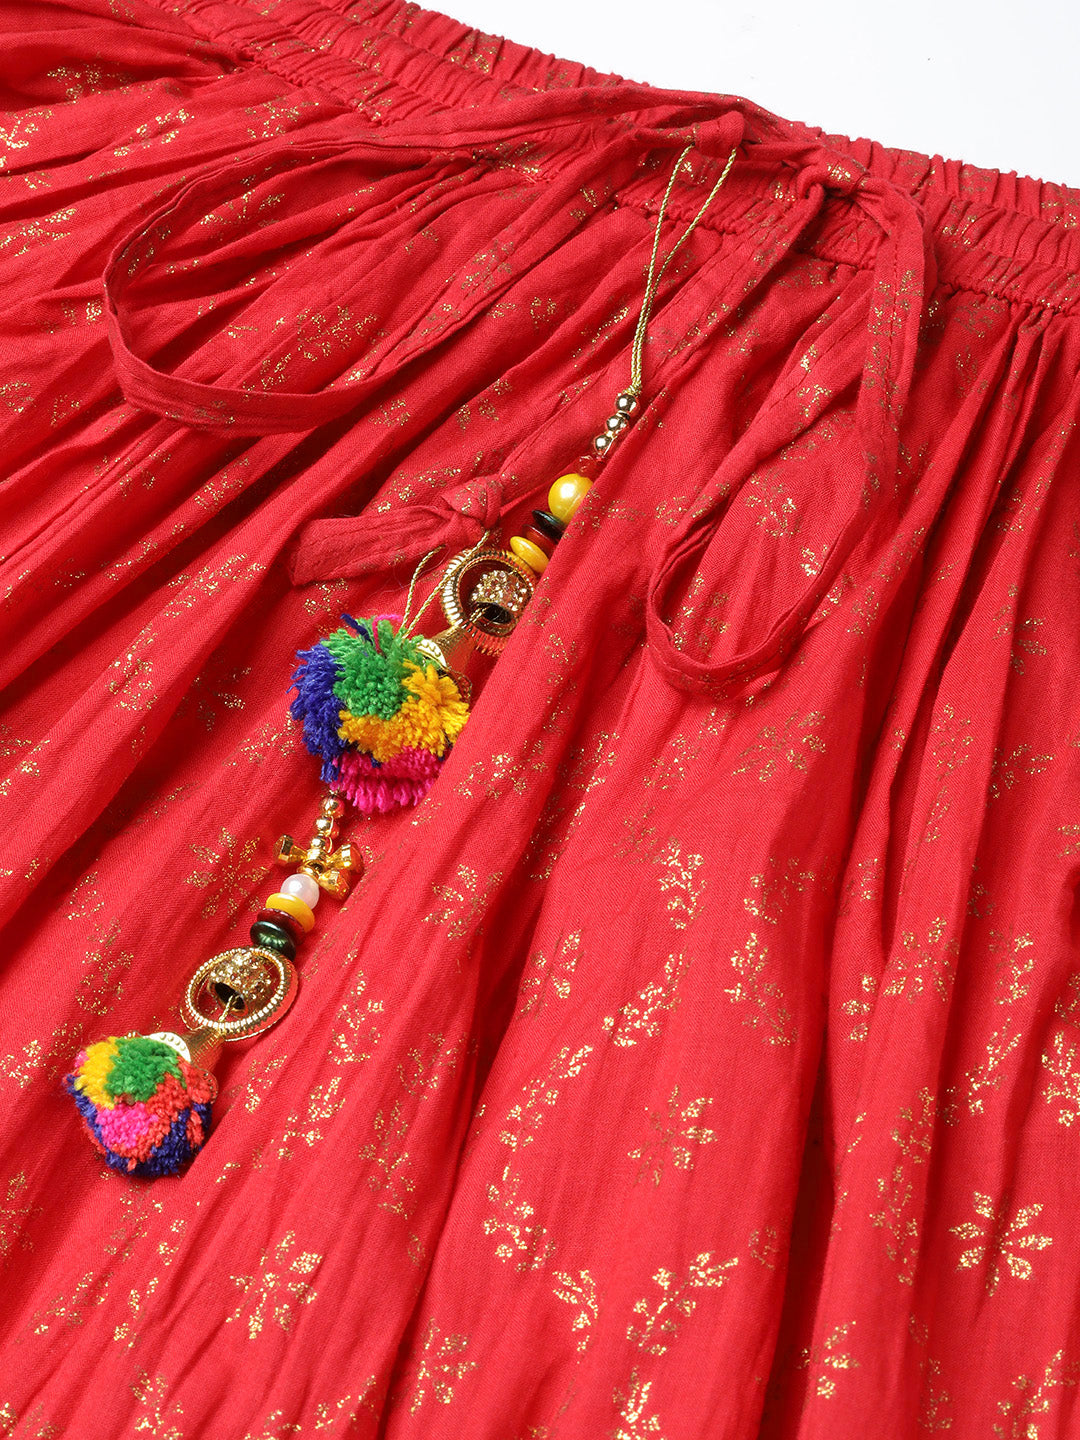 Ishin Women's Cotton Red Embellished Flared Skirt